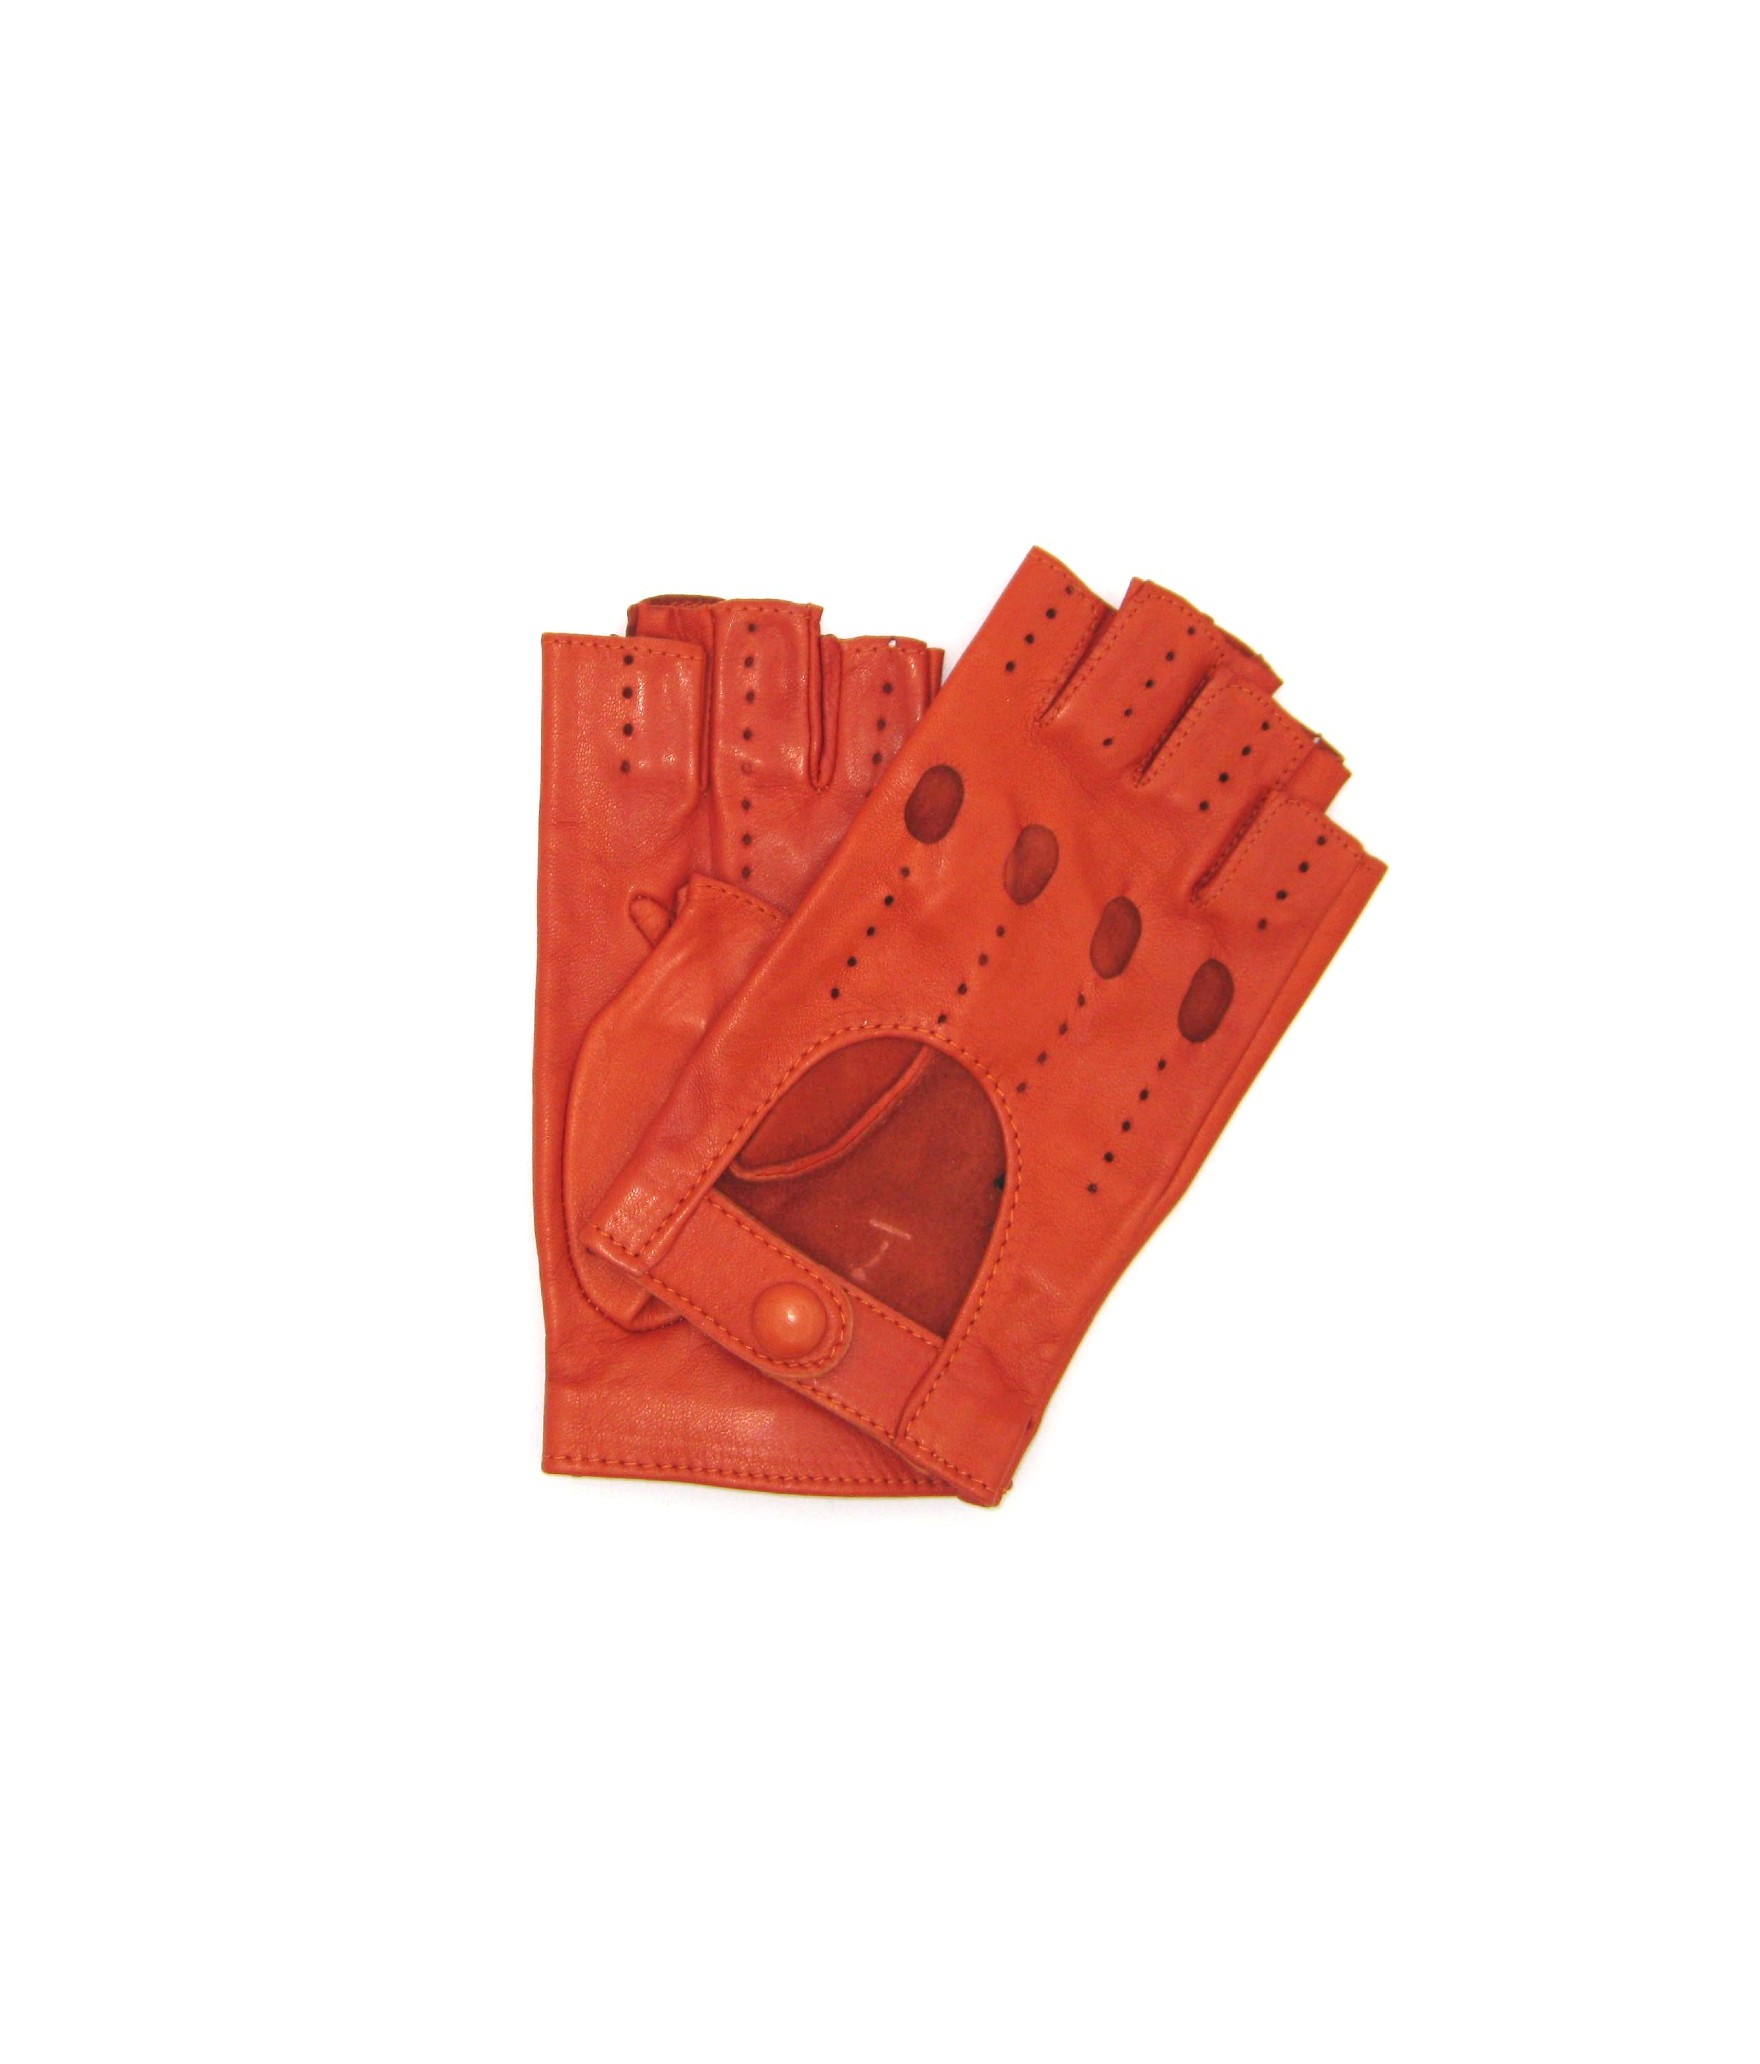 Driving gloves in Nappa Leather fingerless   Dark orange